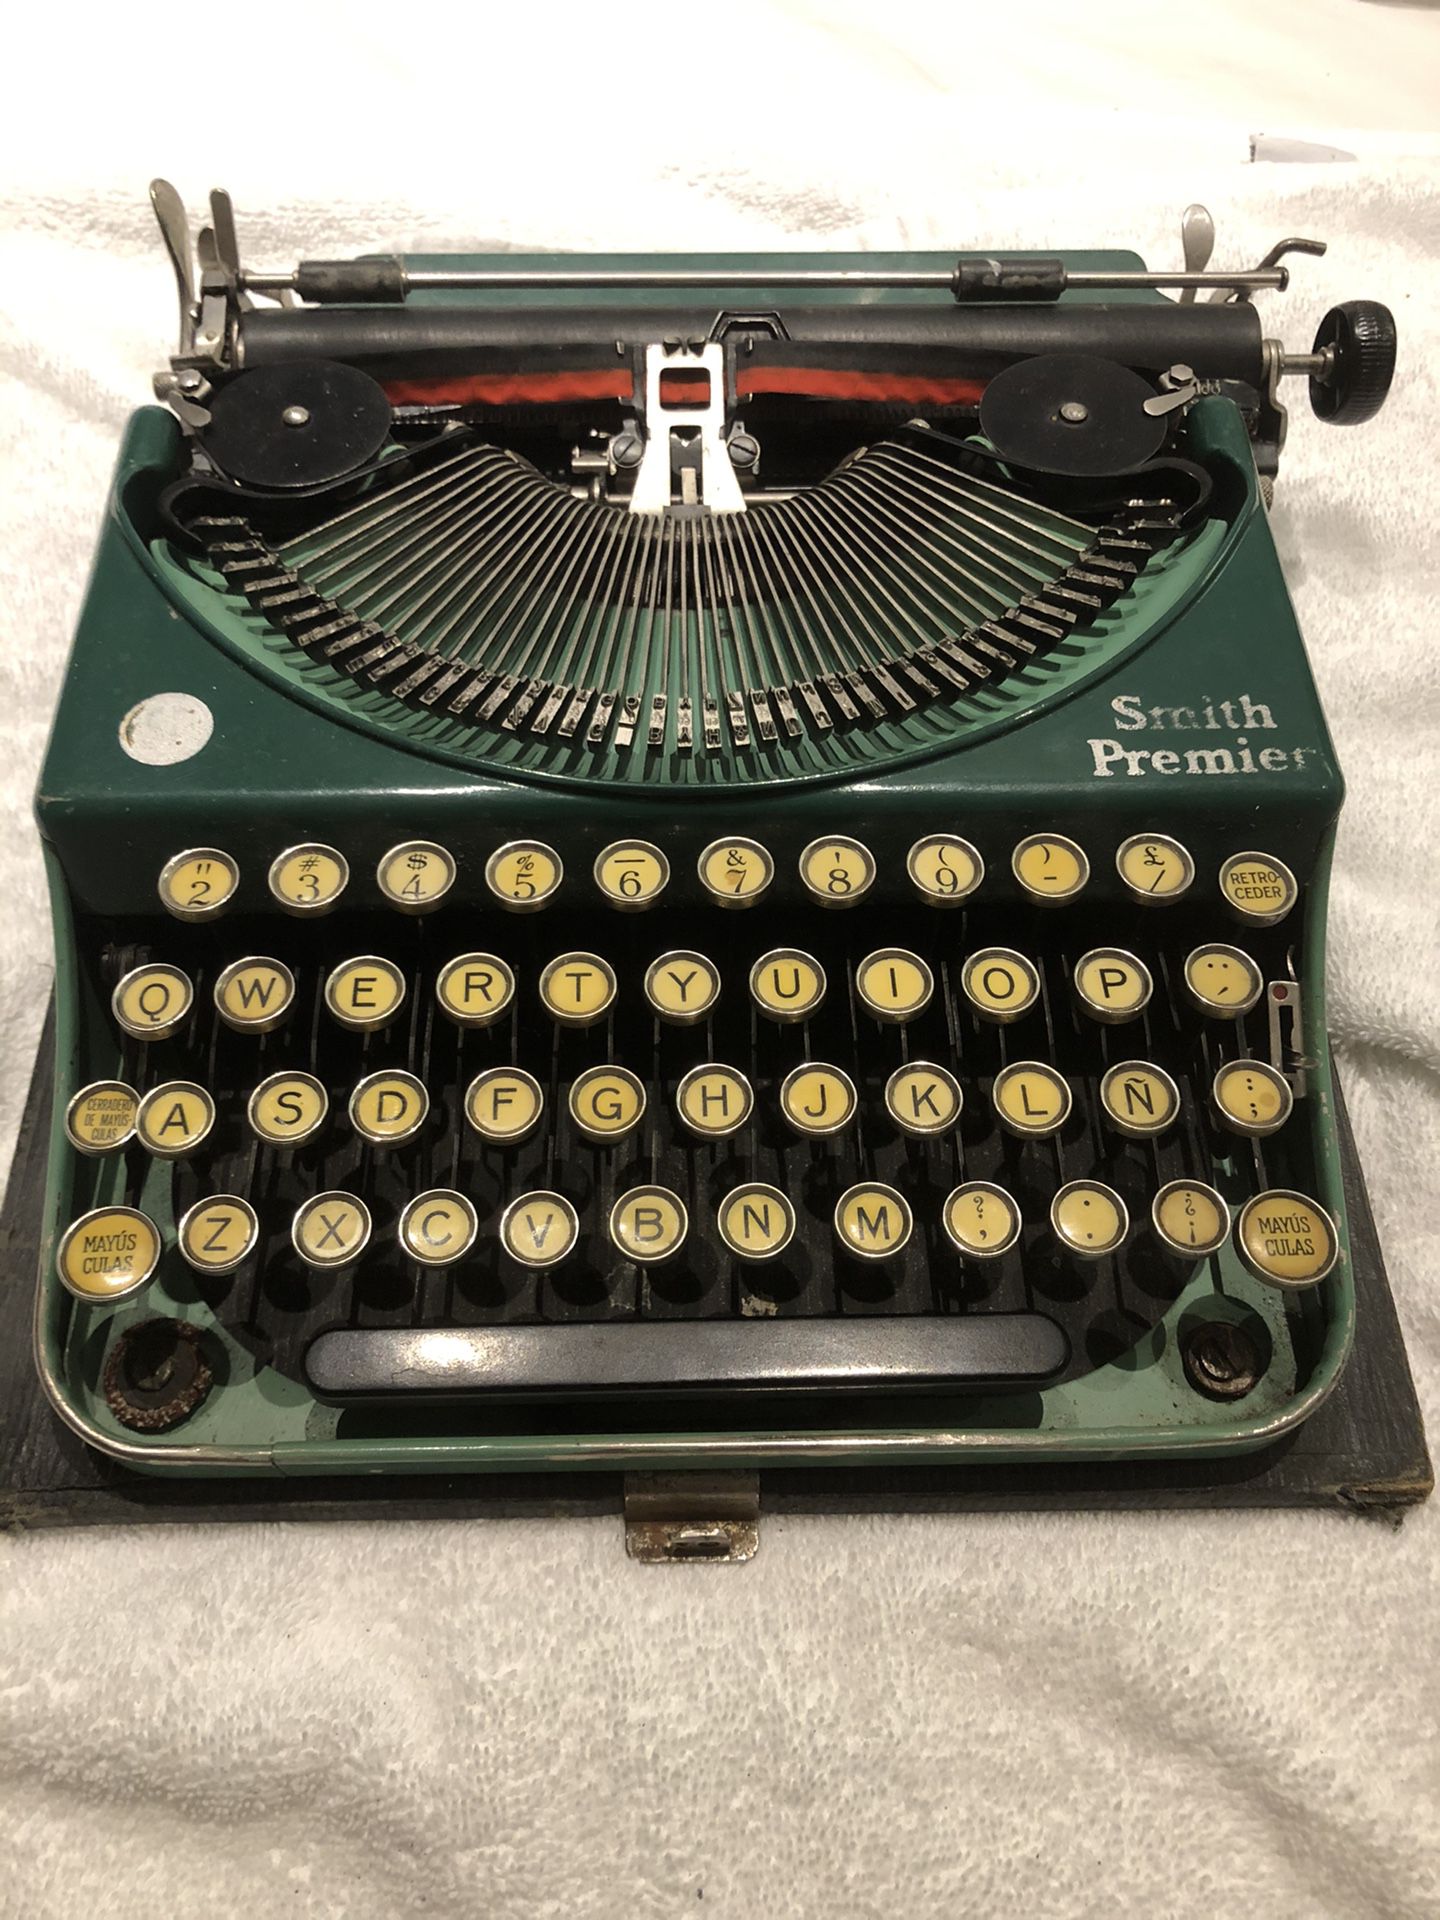 Vintage Smith Premier Typewriter